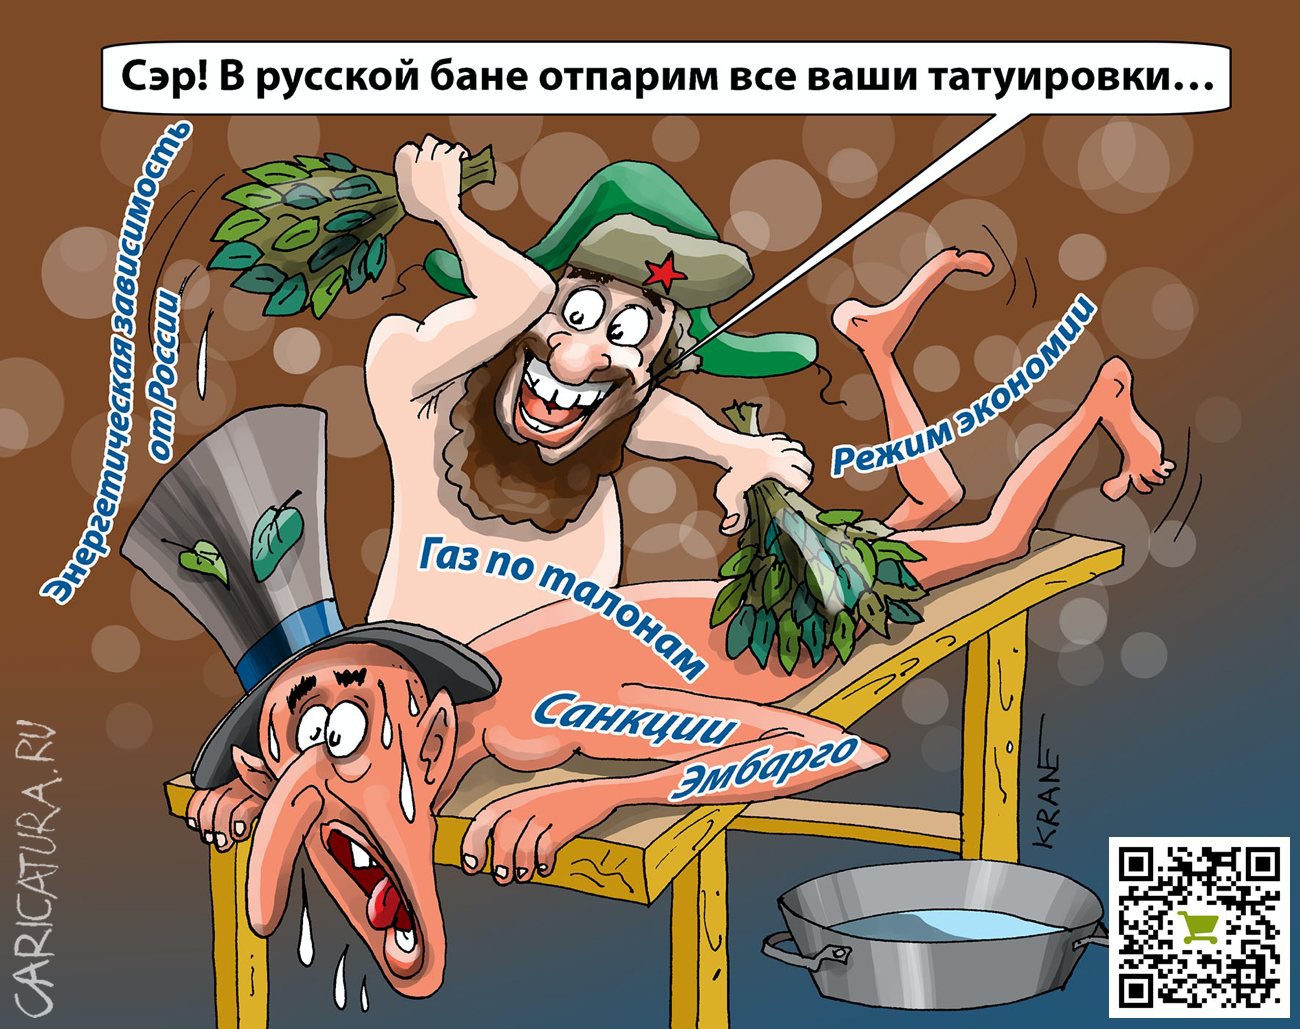 Карикатура "Не мытьём, так катаньем", Евгений Кран